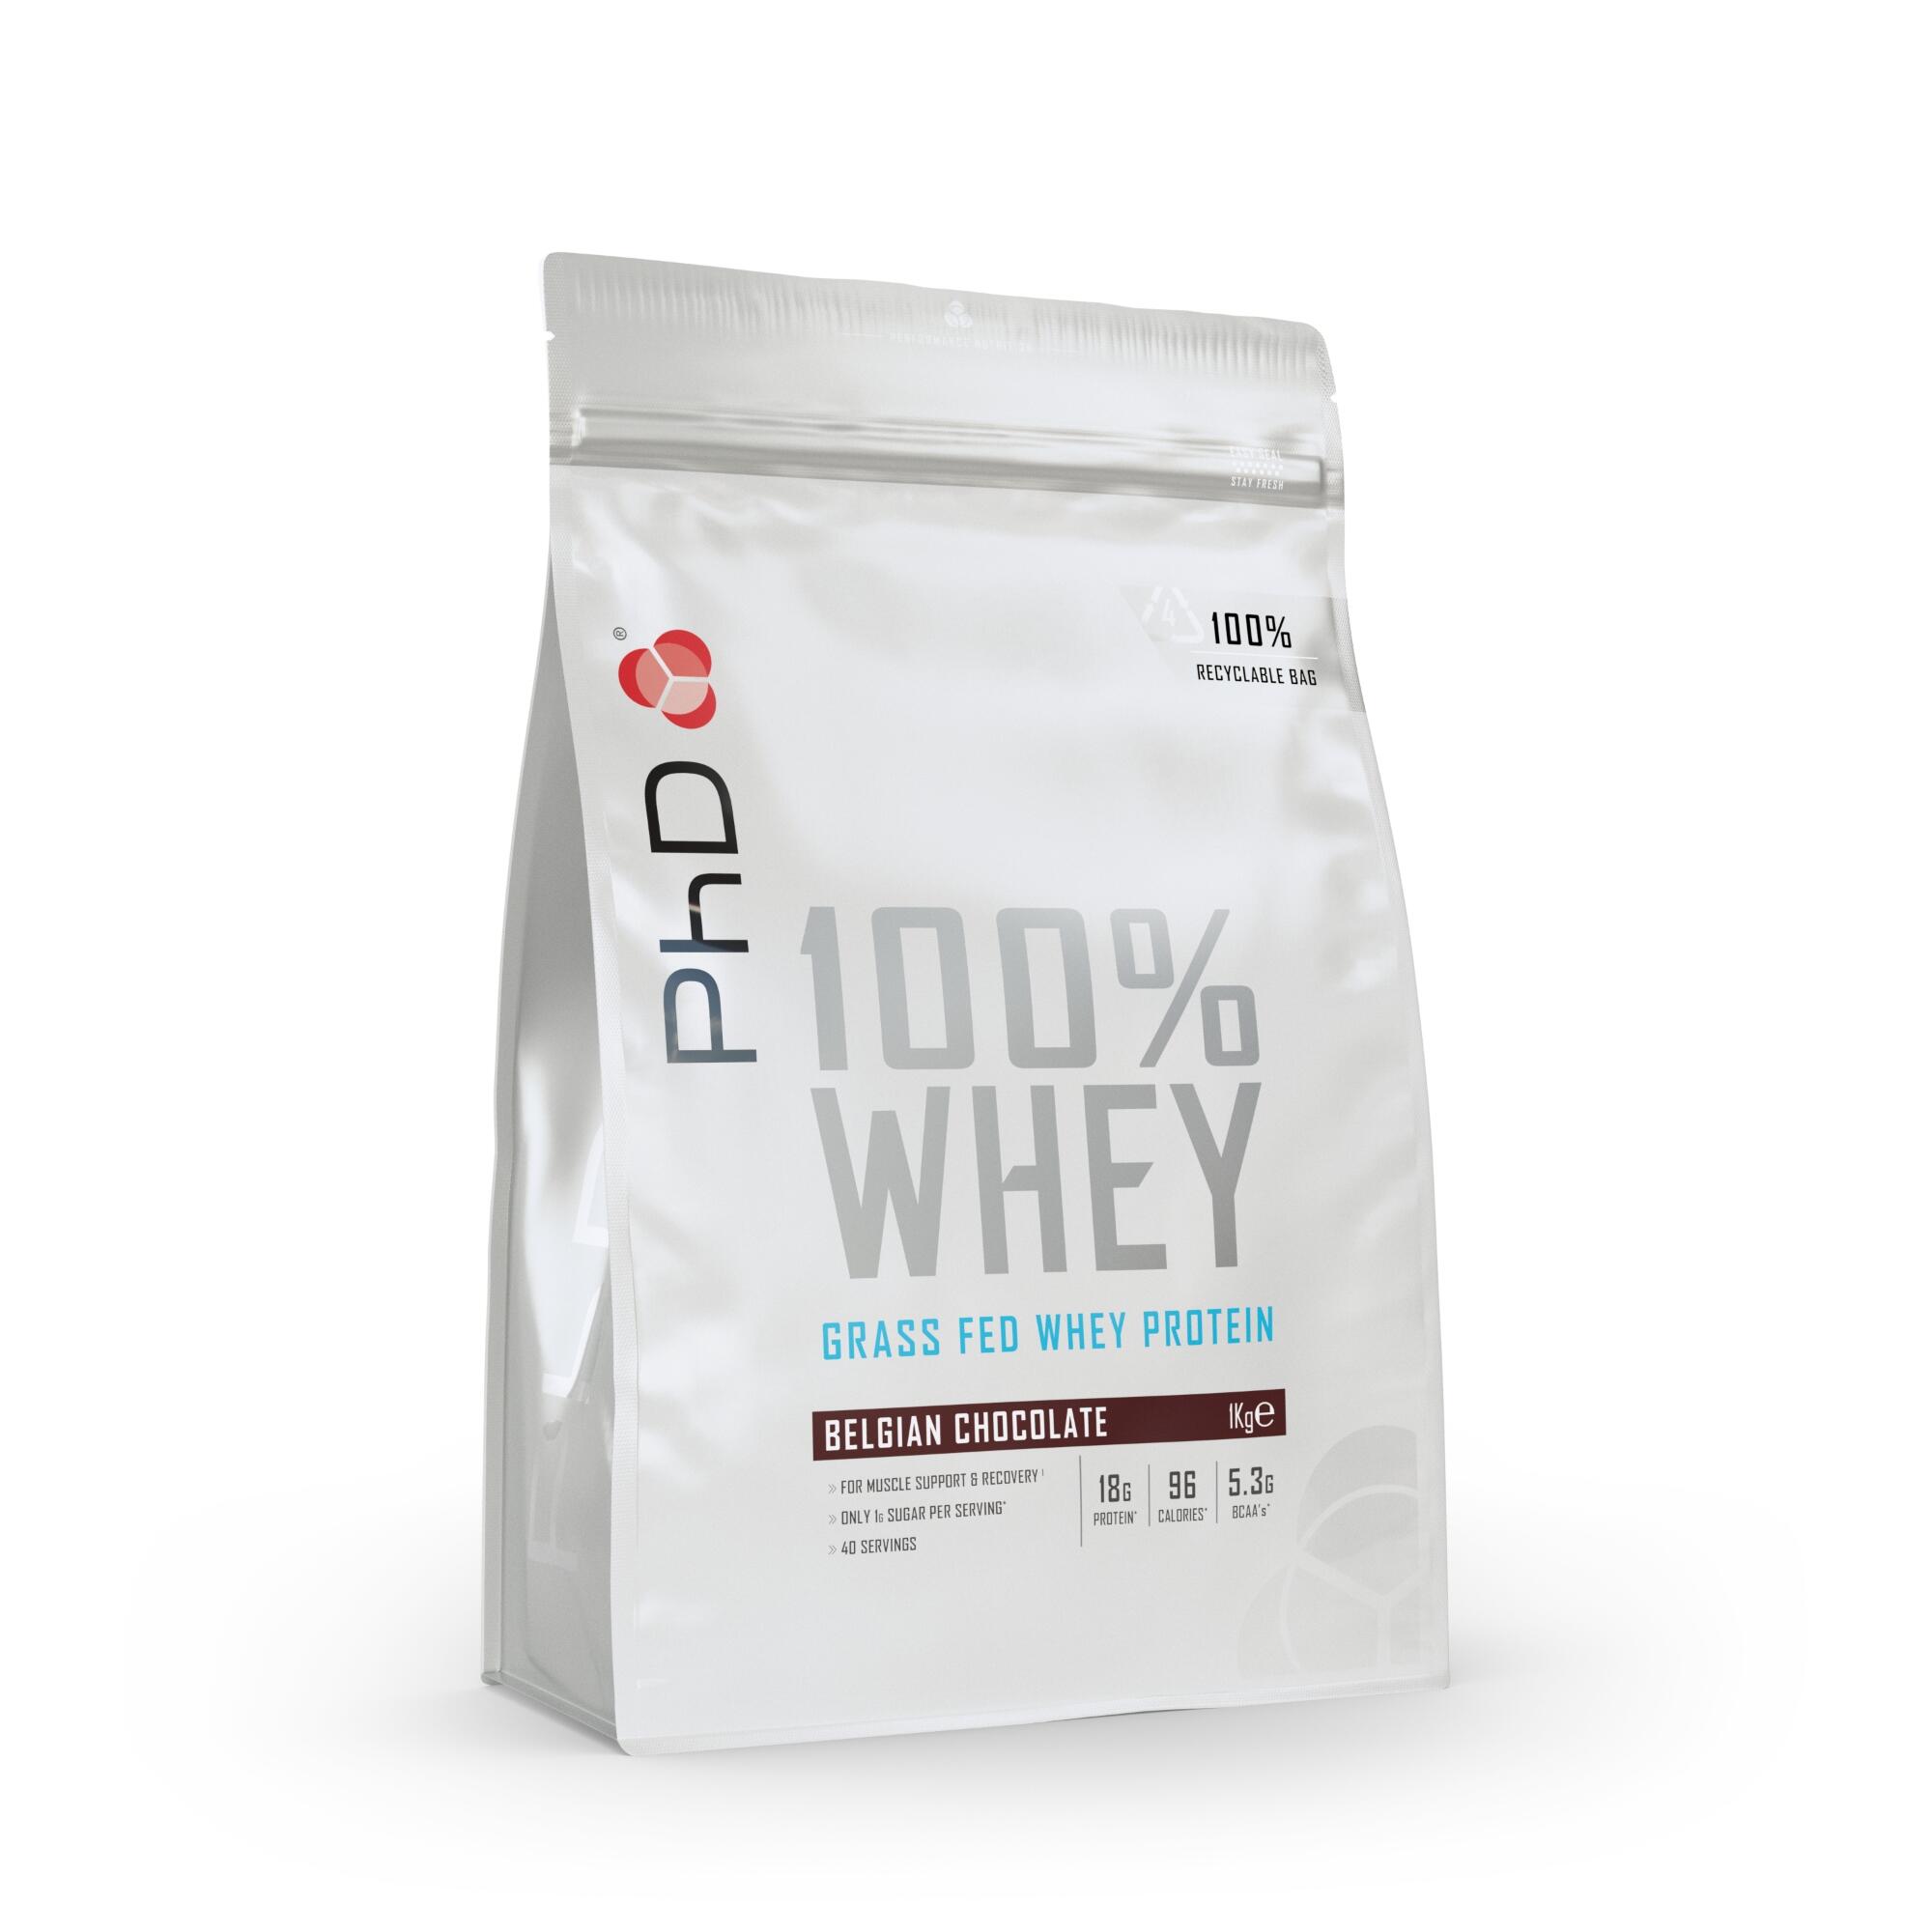 PHD NUTRITION PhD Nutrition | 100% Whey Powder | Belgian Chocolate Flavour | 1kg